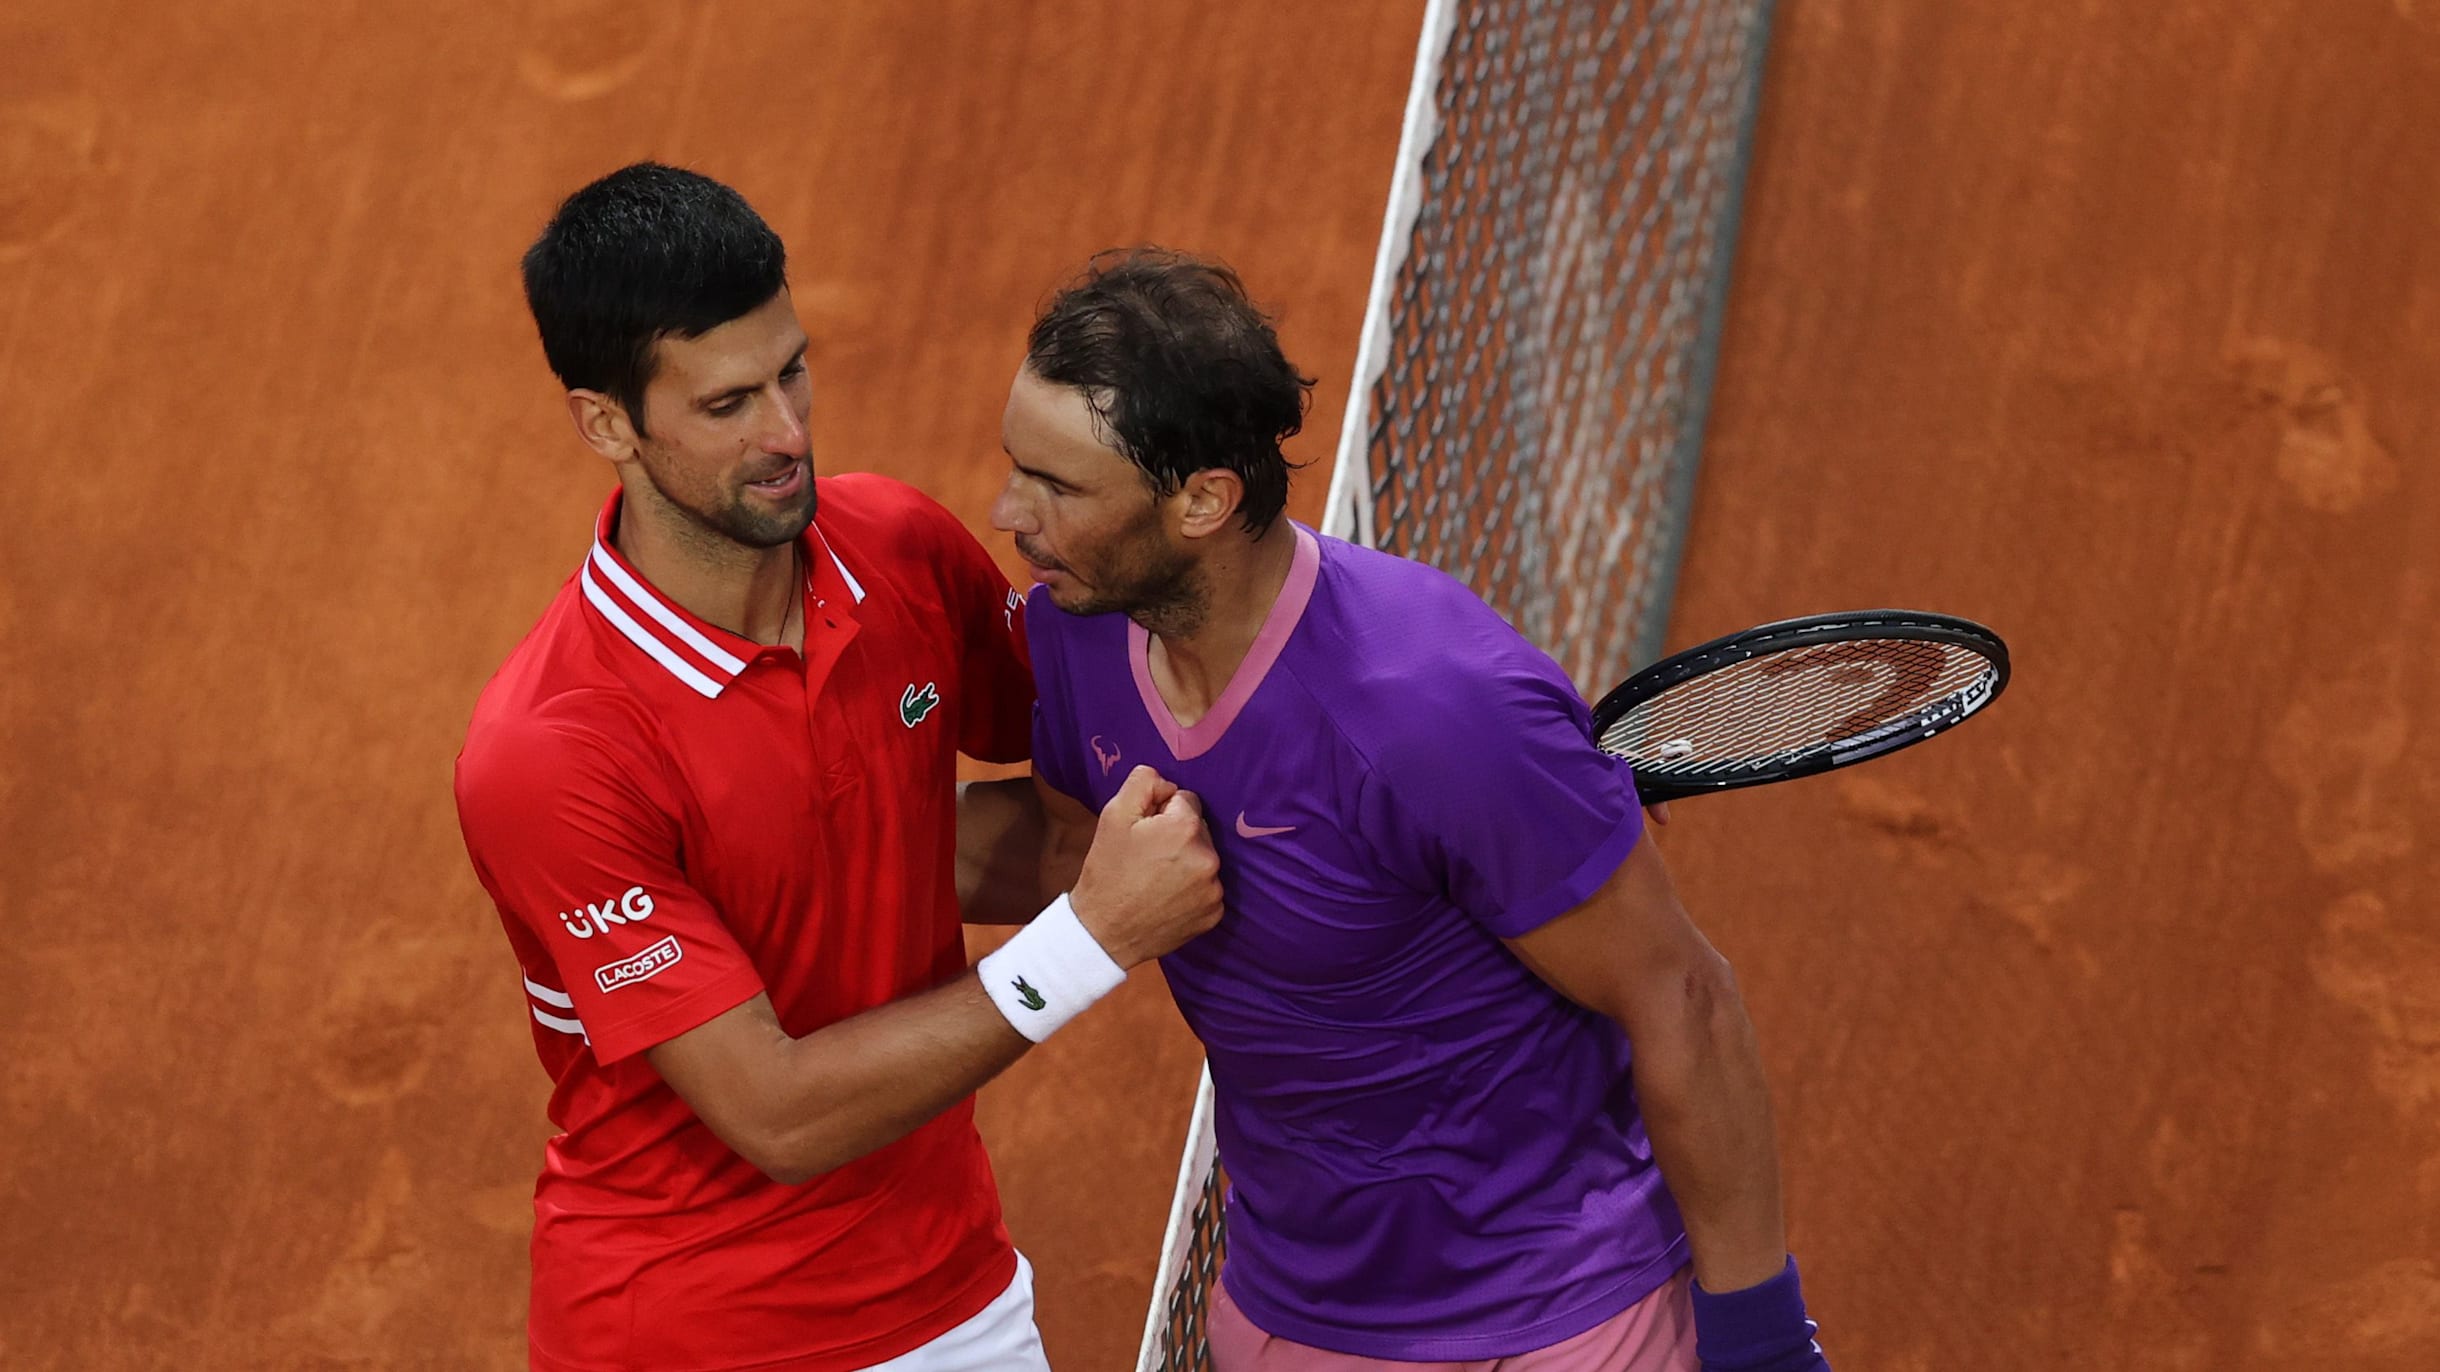 Rafael Nadal vs Novak Djokovic, French Open 2021 semi-finals, watch live streaming and telecast in India